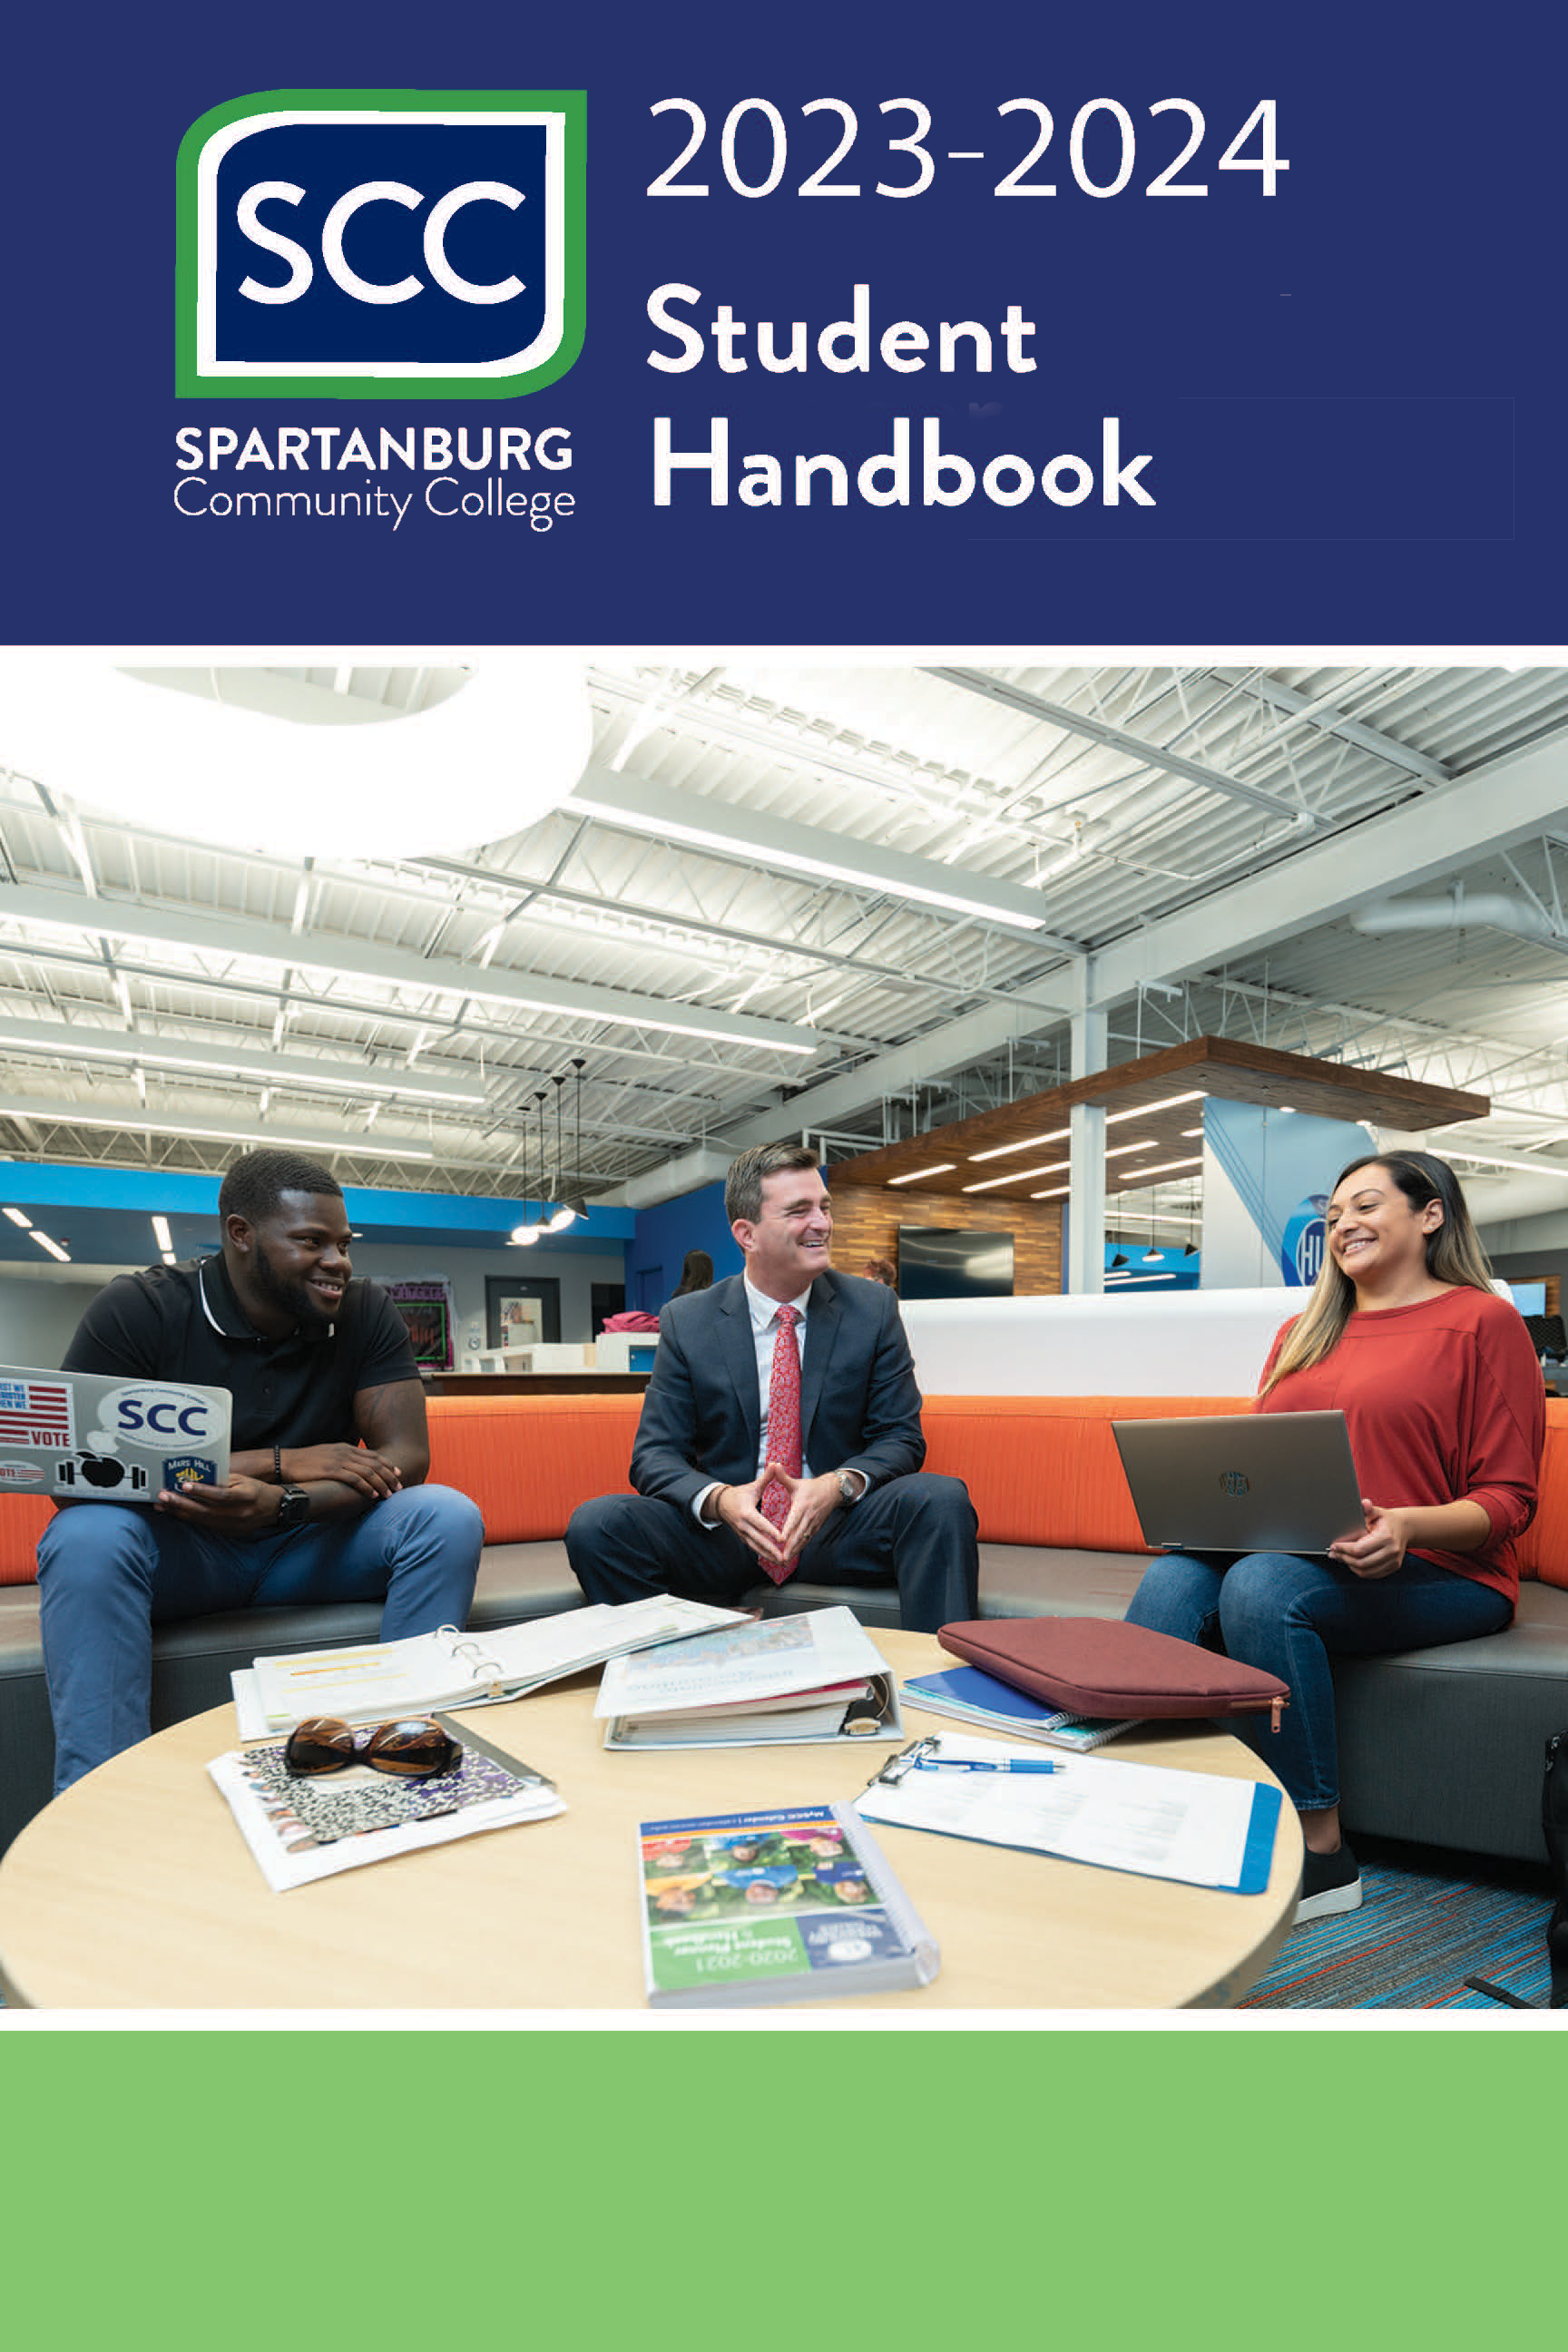 2022-2022 Student Handbook Cover